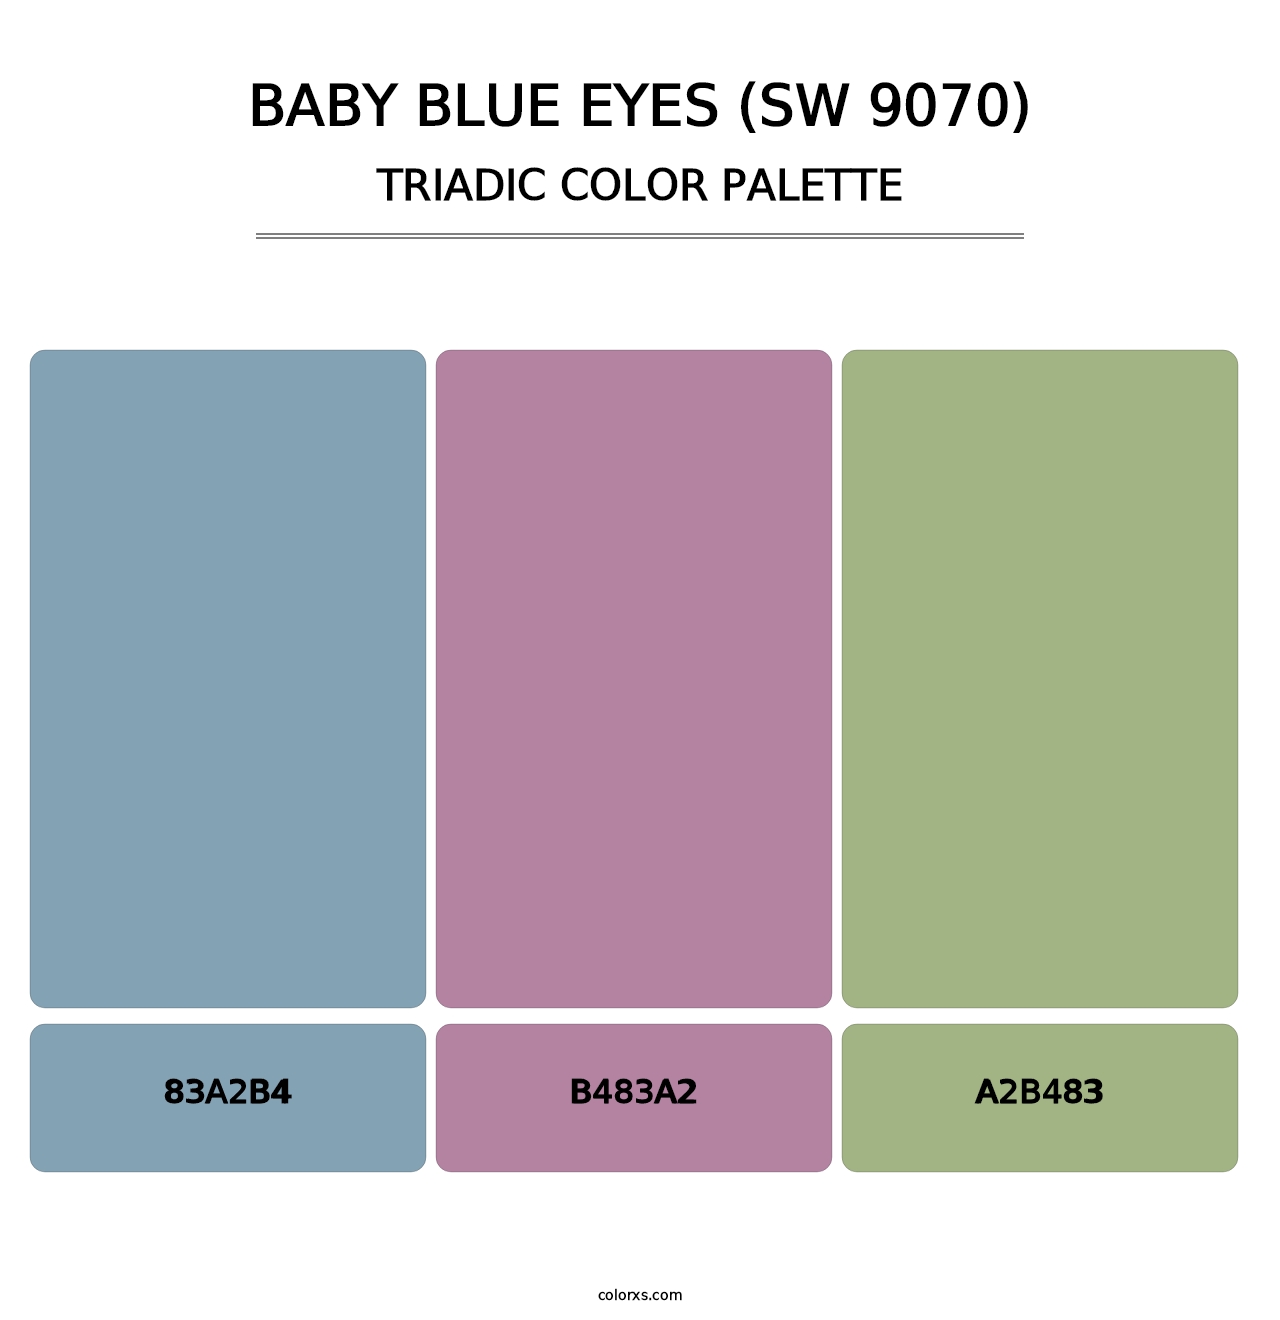 Baby Blue Eyes (SW 9070) - Triadic Color Palette